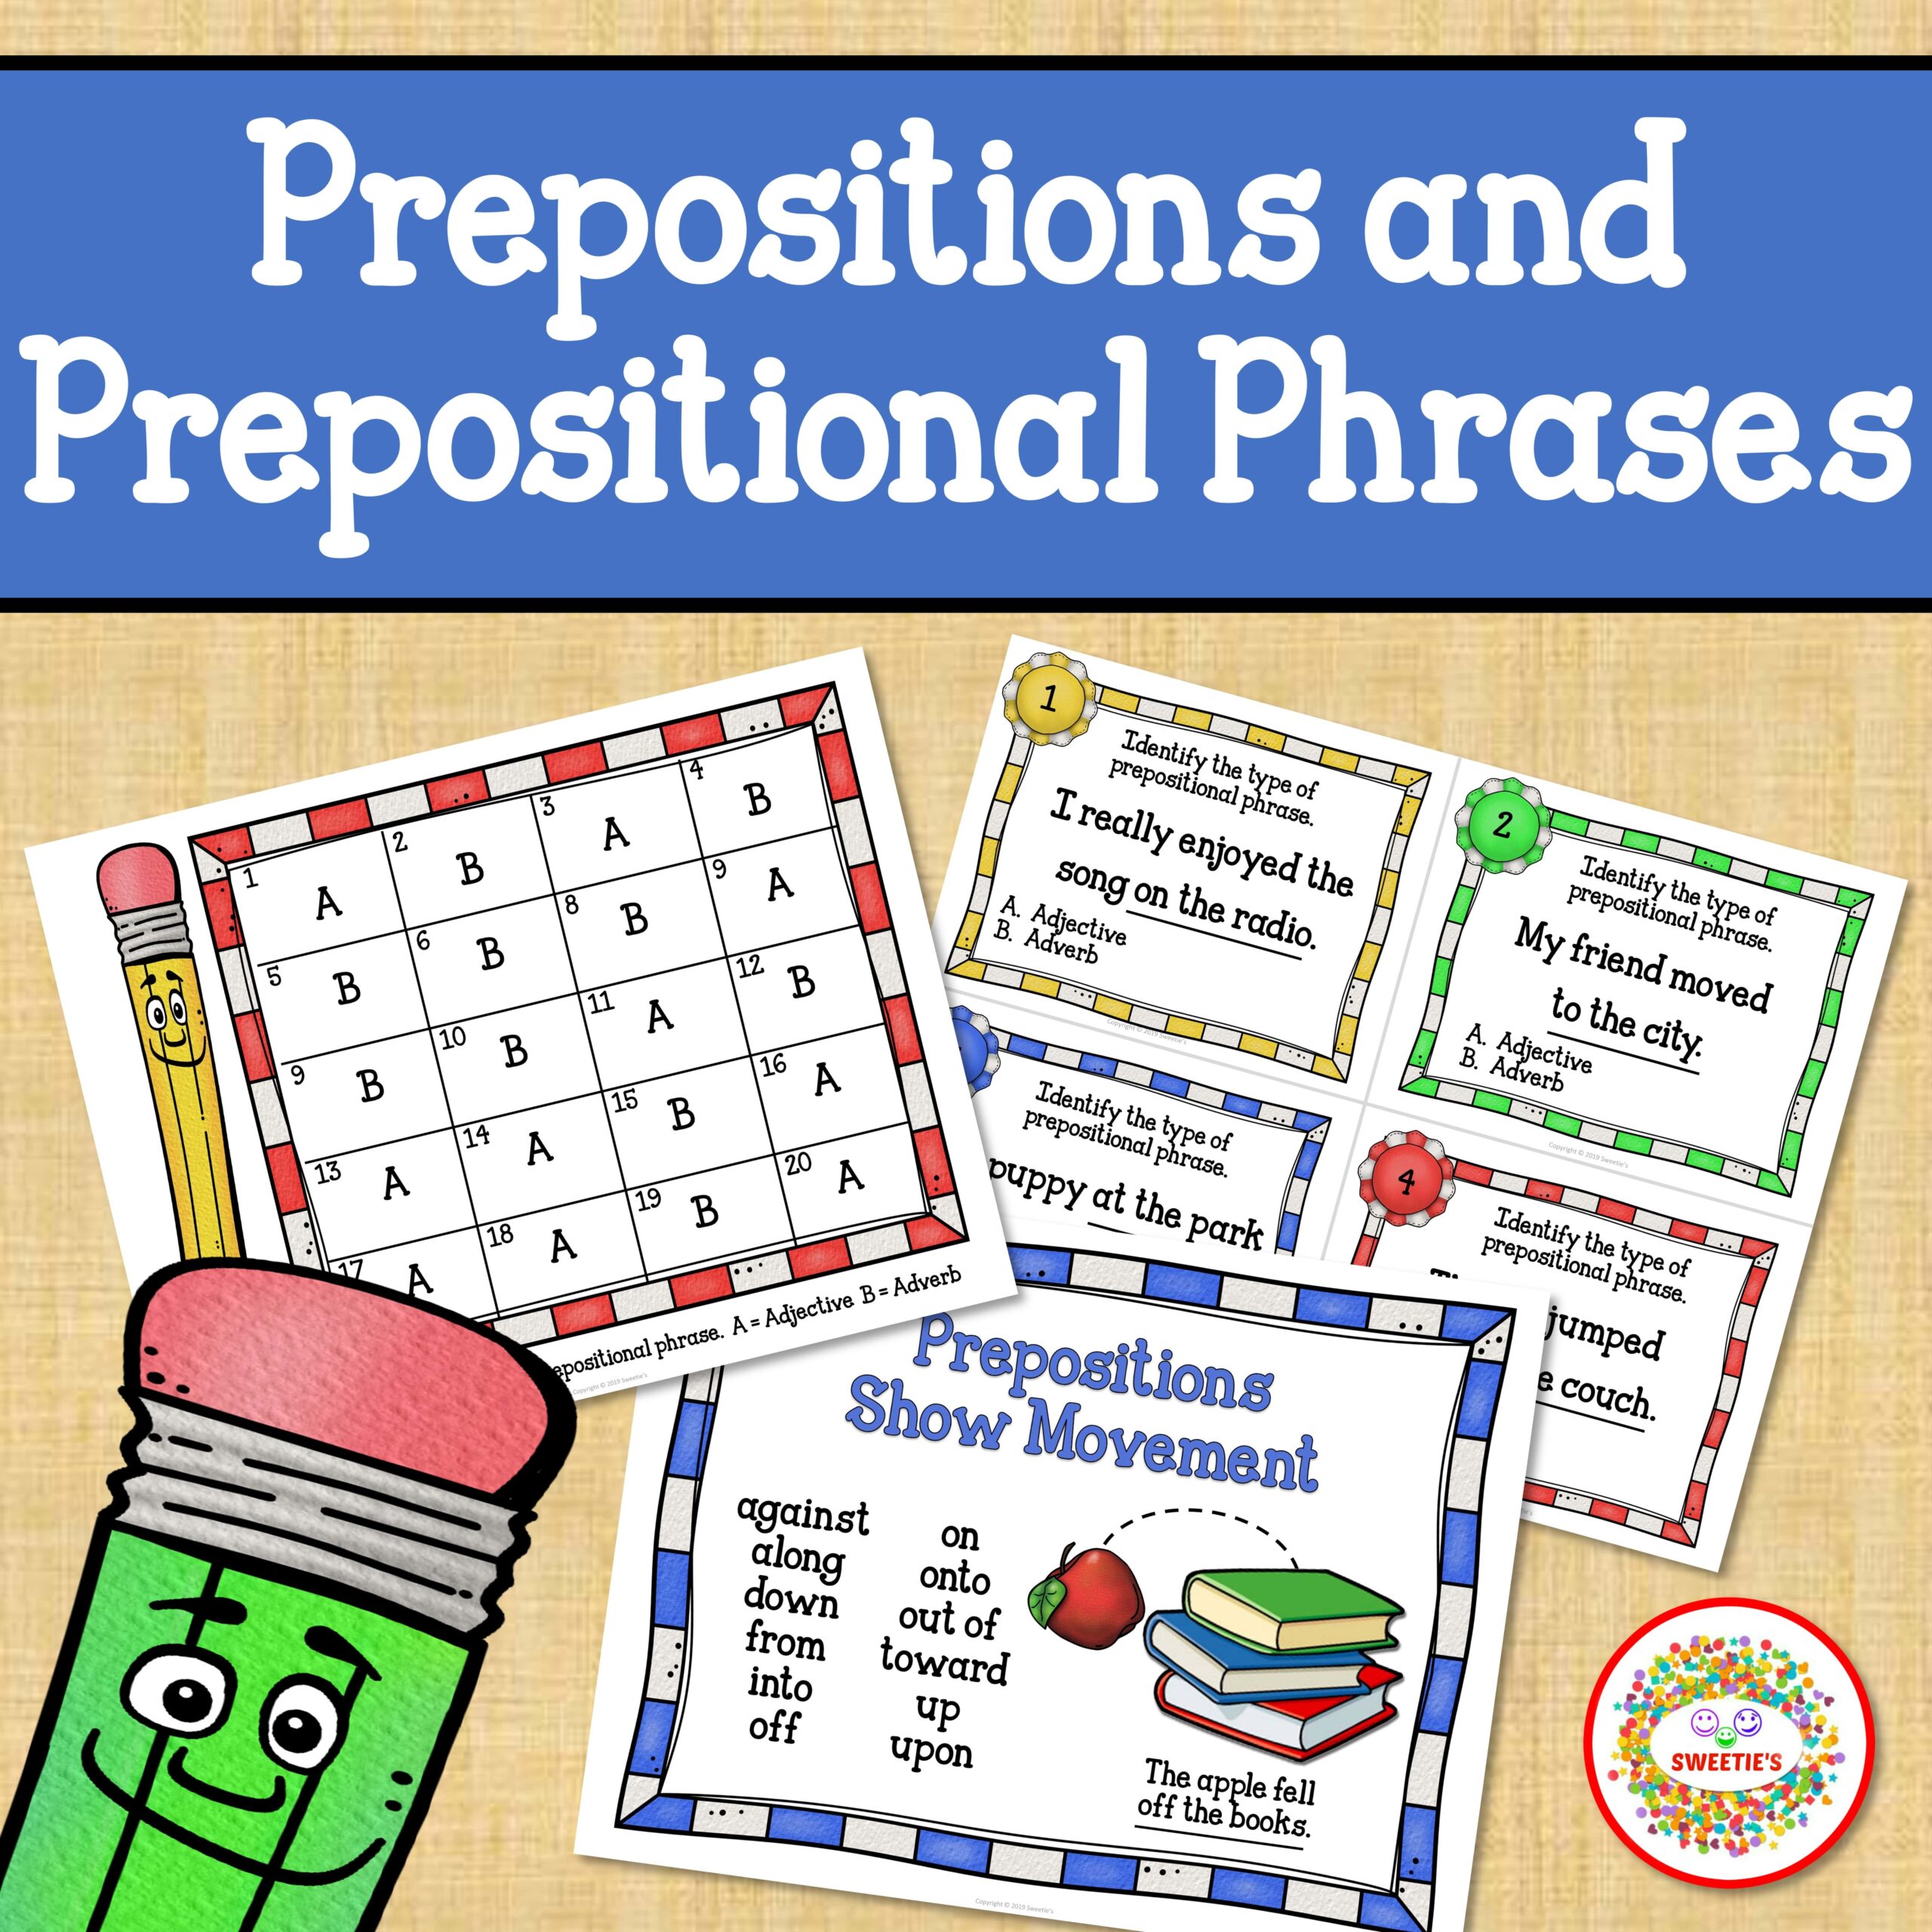 Preposition Task Cards